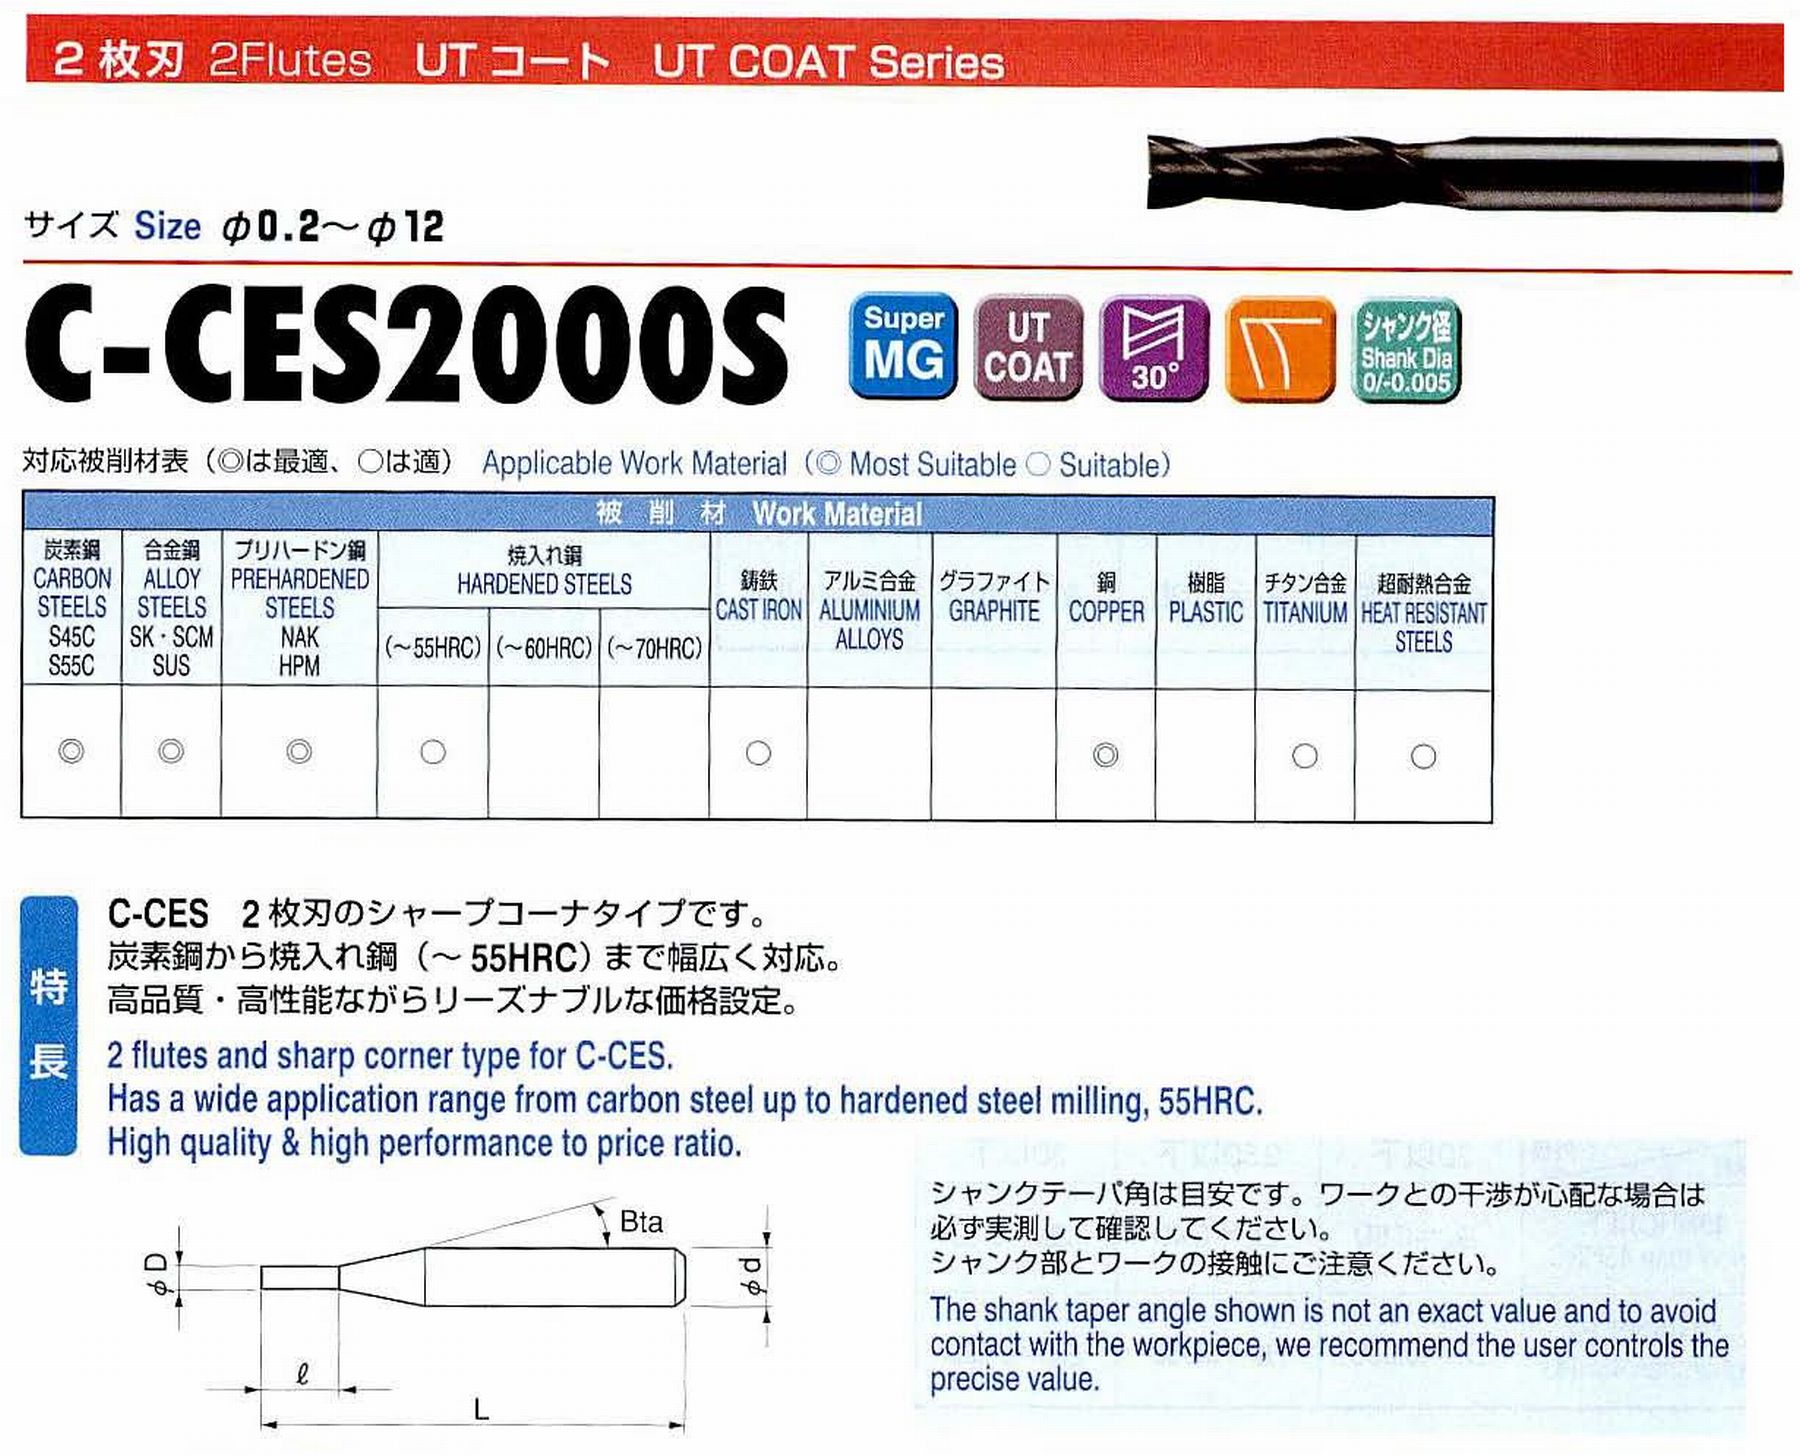 UNION 2枚刃 C-CES2002-0030S 外径0.2 刃長0.3 シャンクテーバ角16度 全長45 シャンク径4